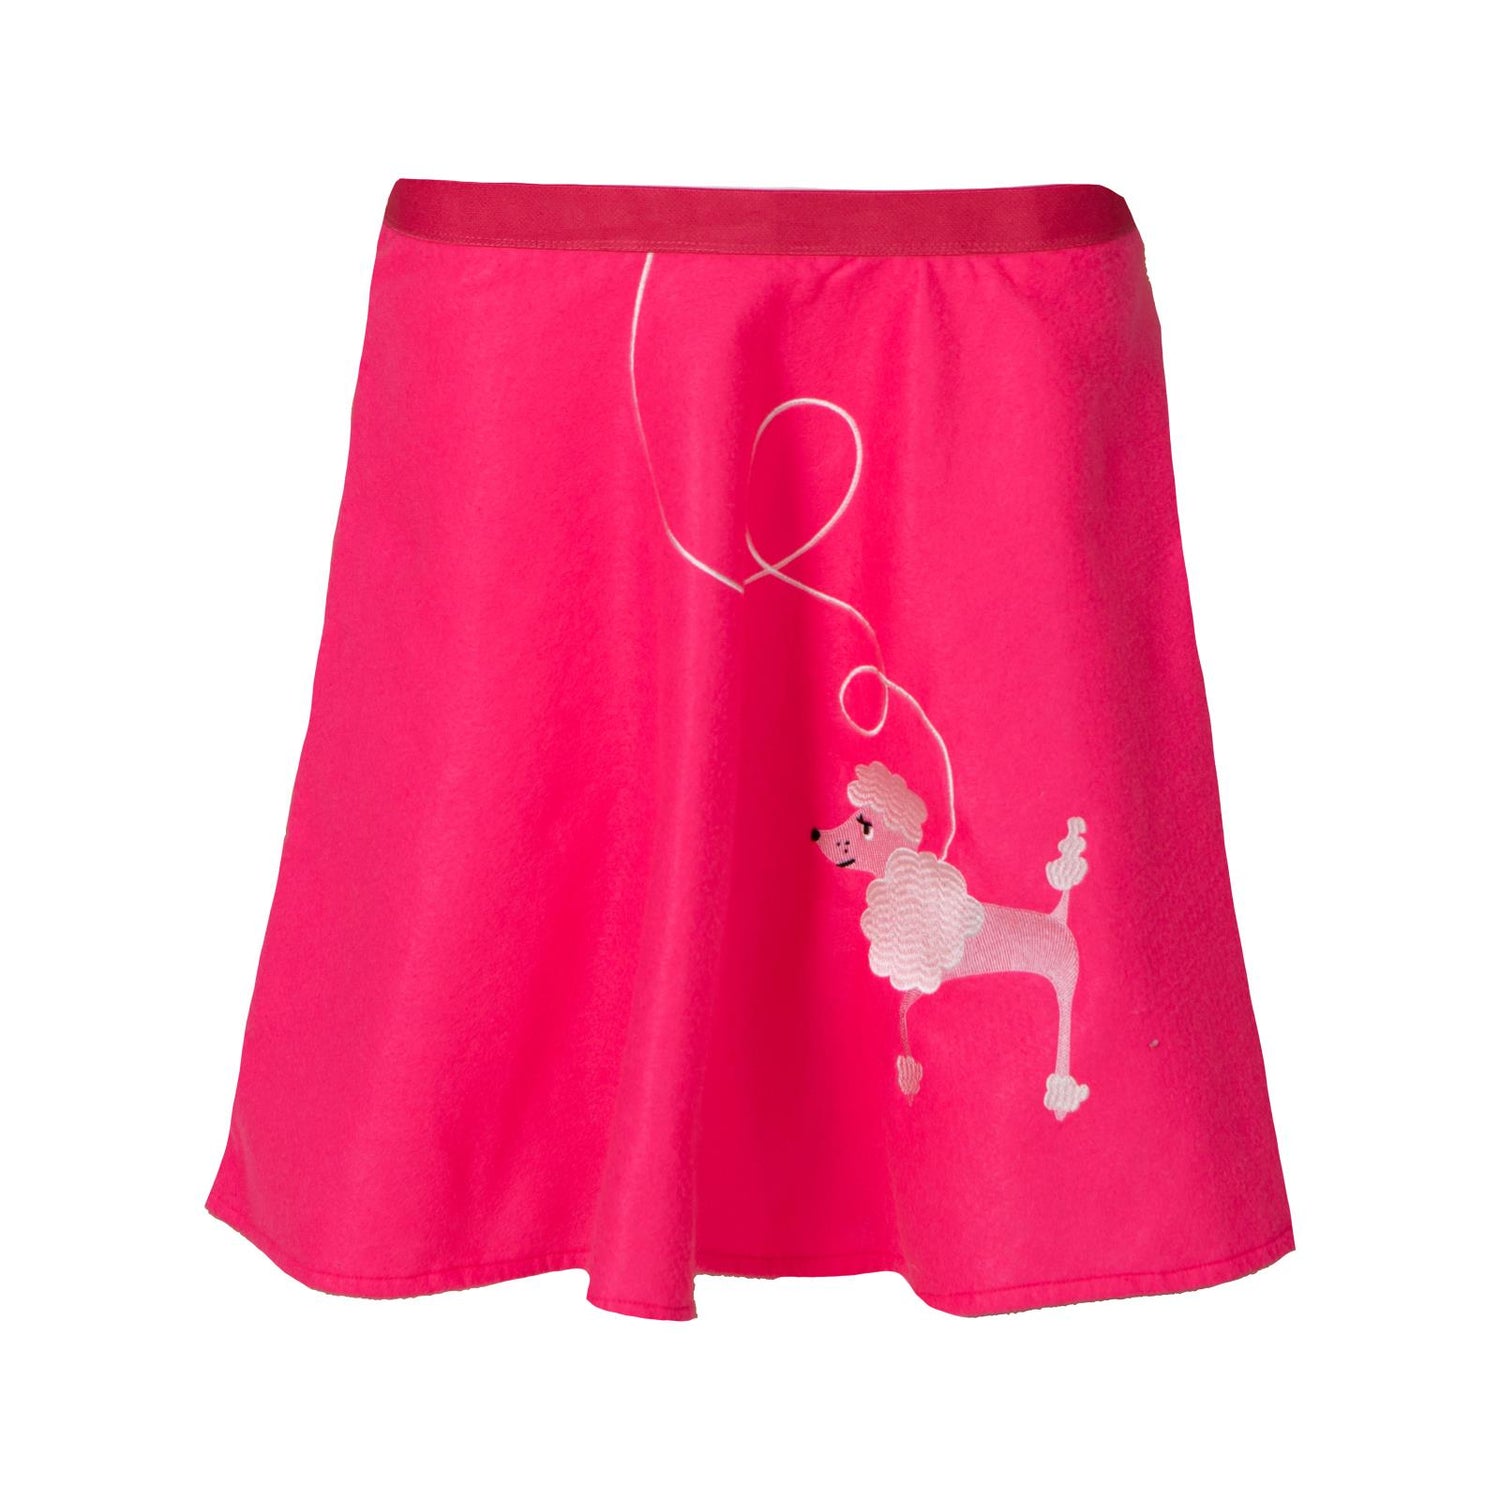 Women's Felt Poodle Skirt with Applique in Flamingo Poodle